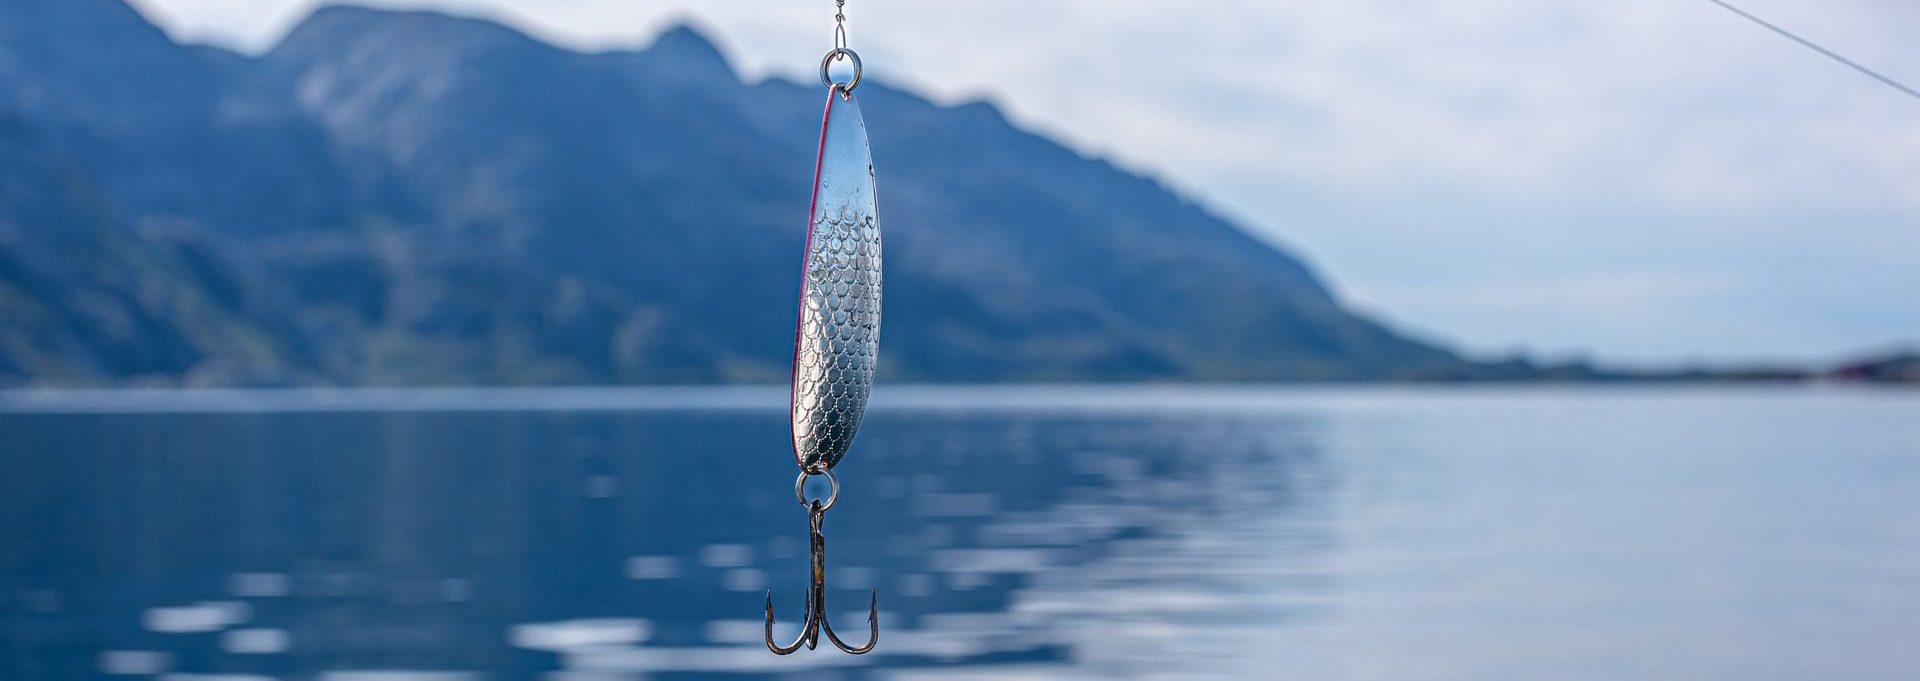 Alberta Fishing Regulations